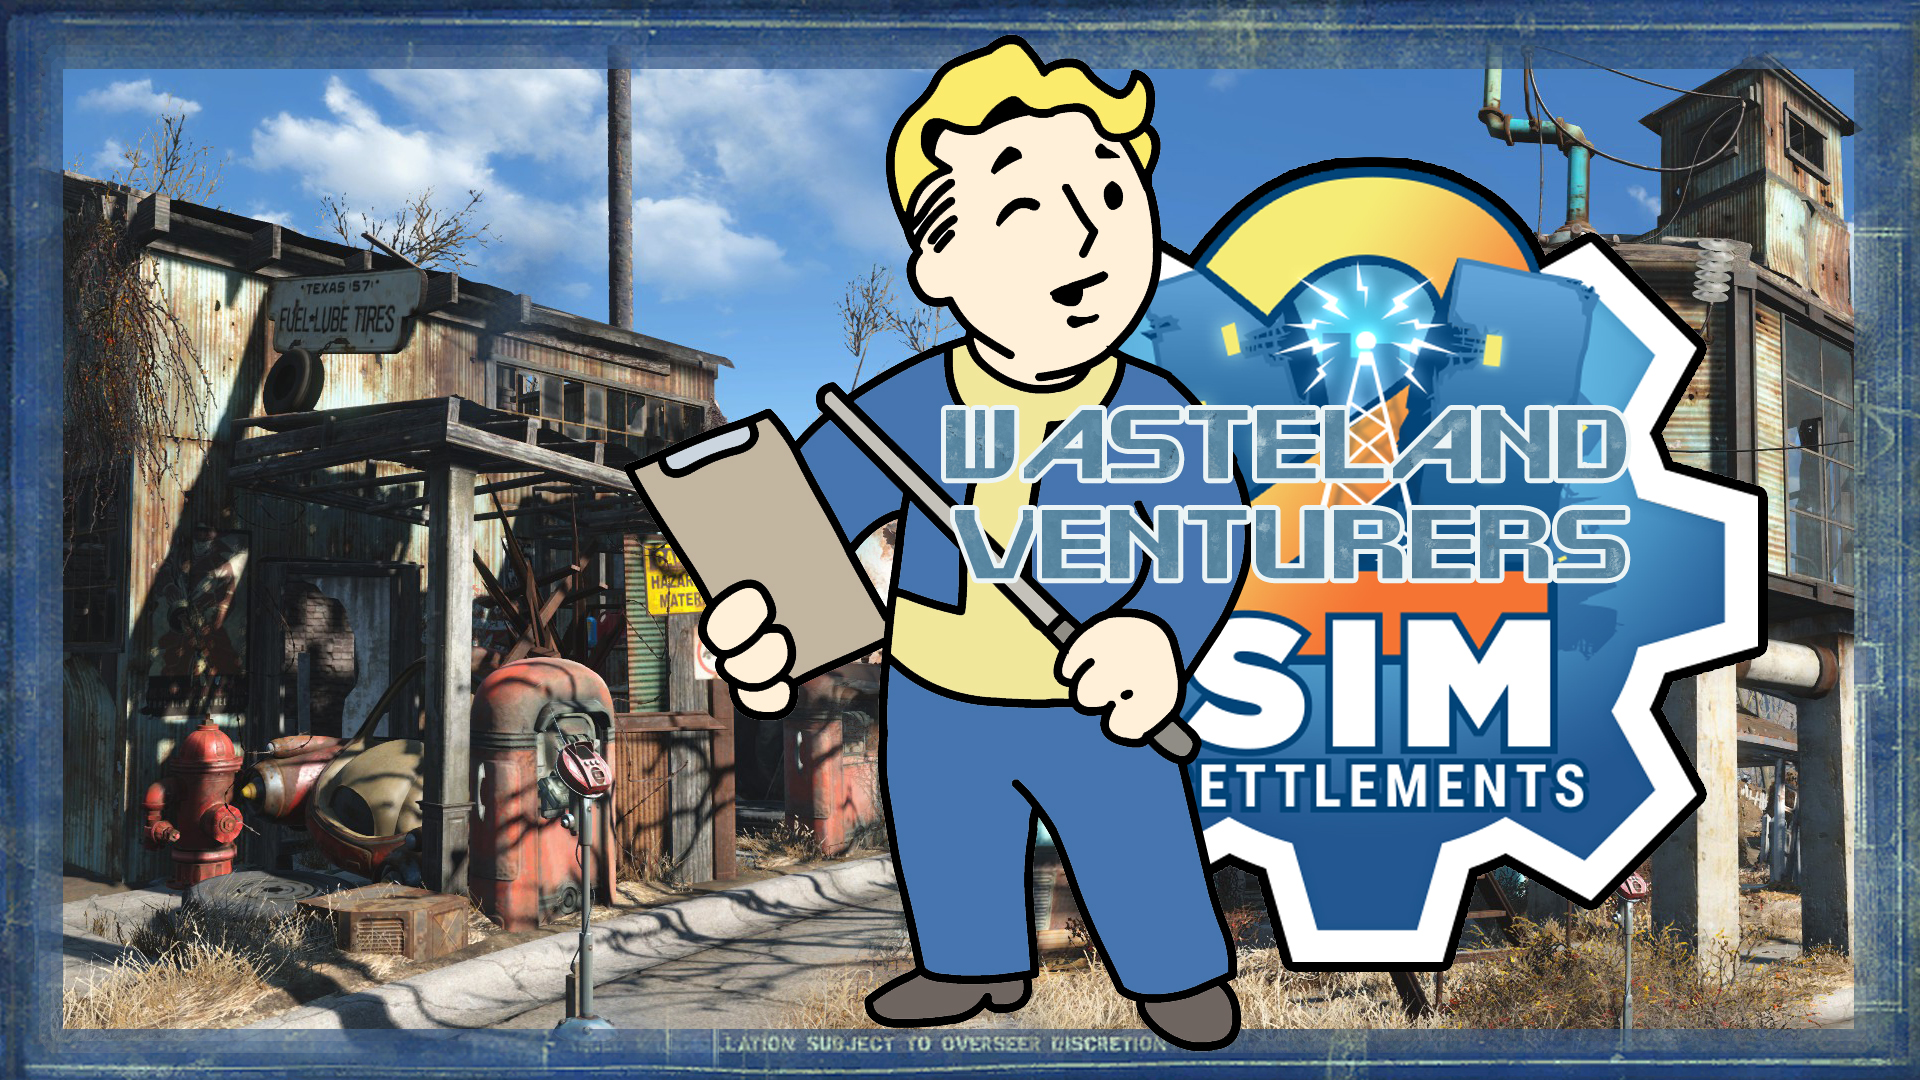 fallout 4 sim settlements addons